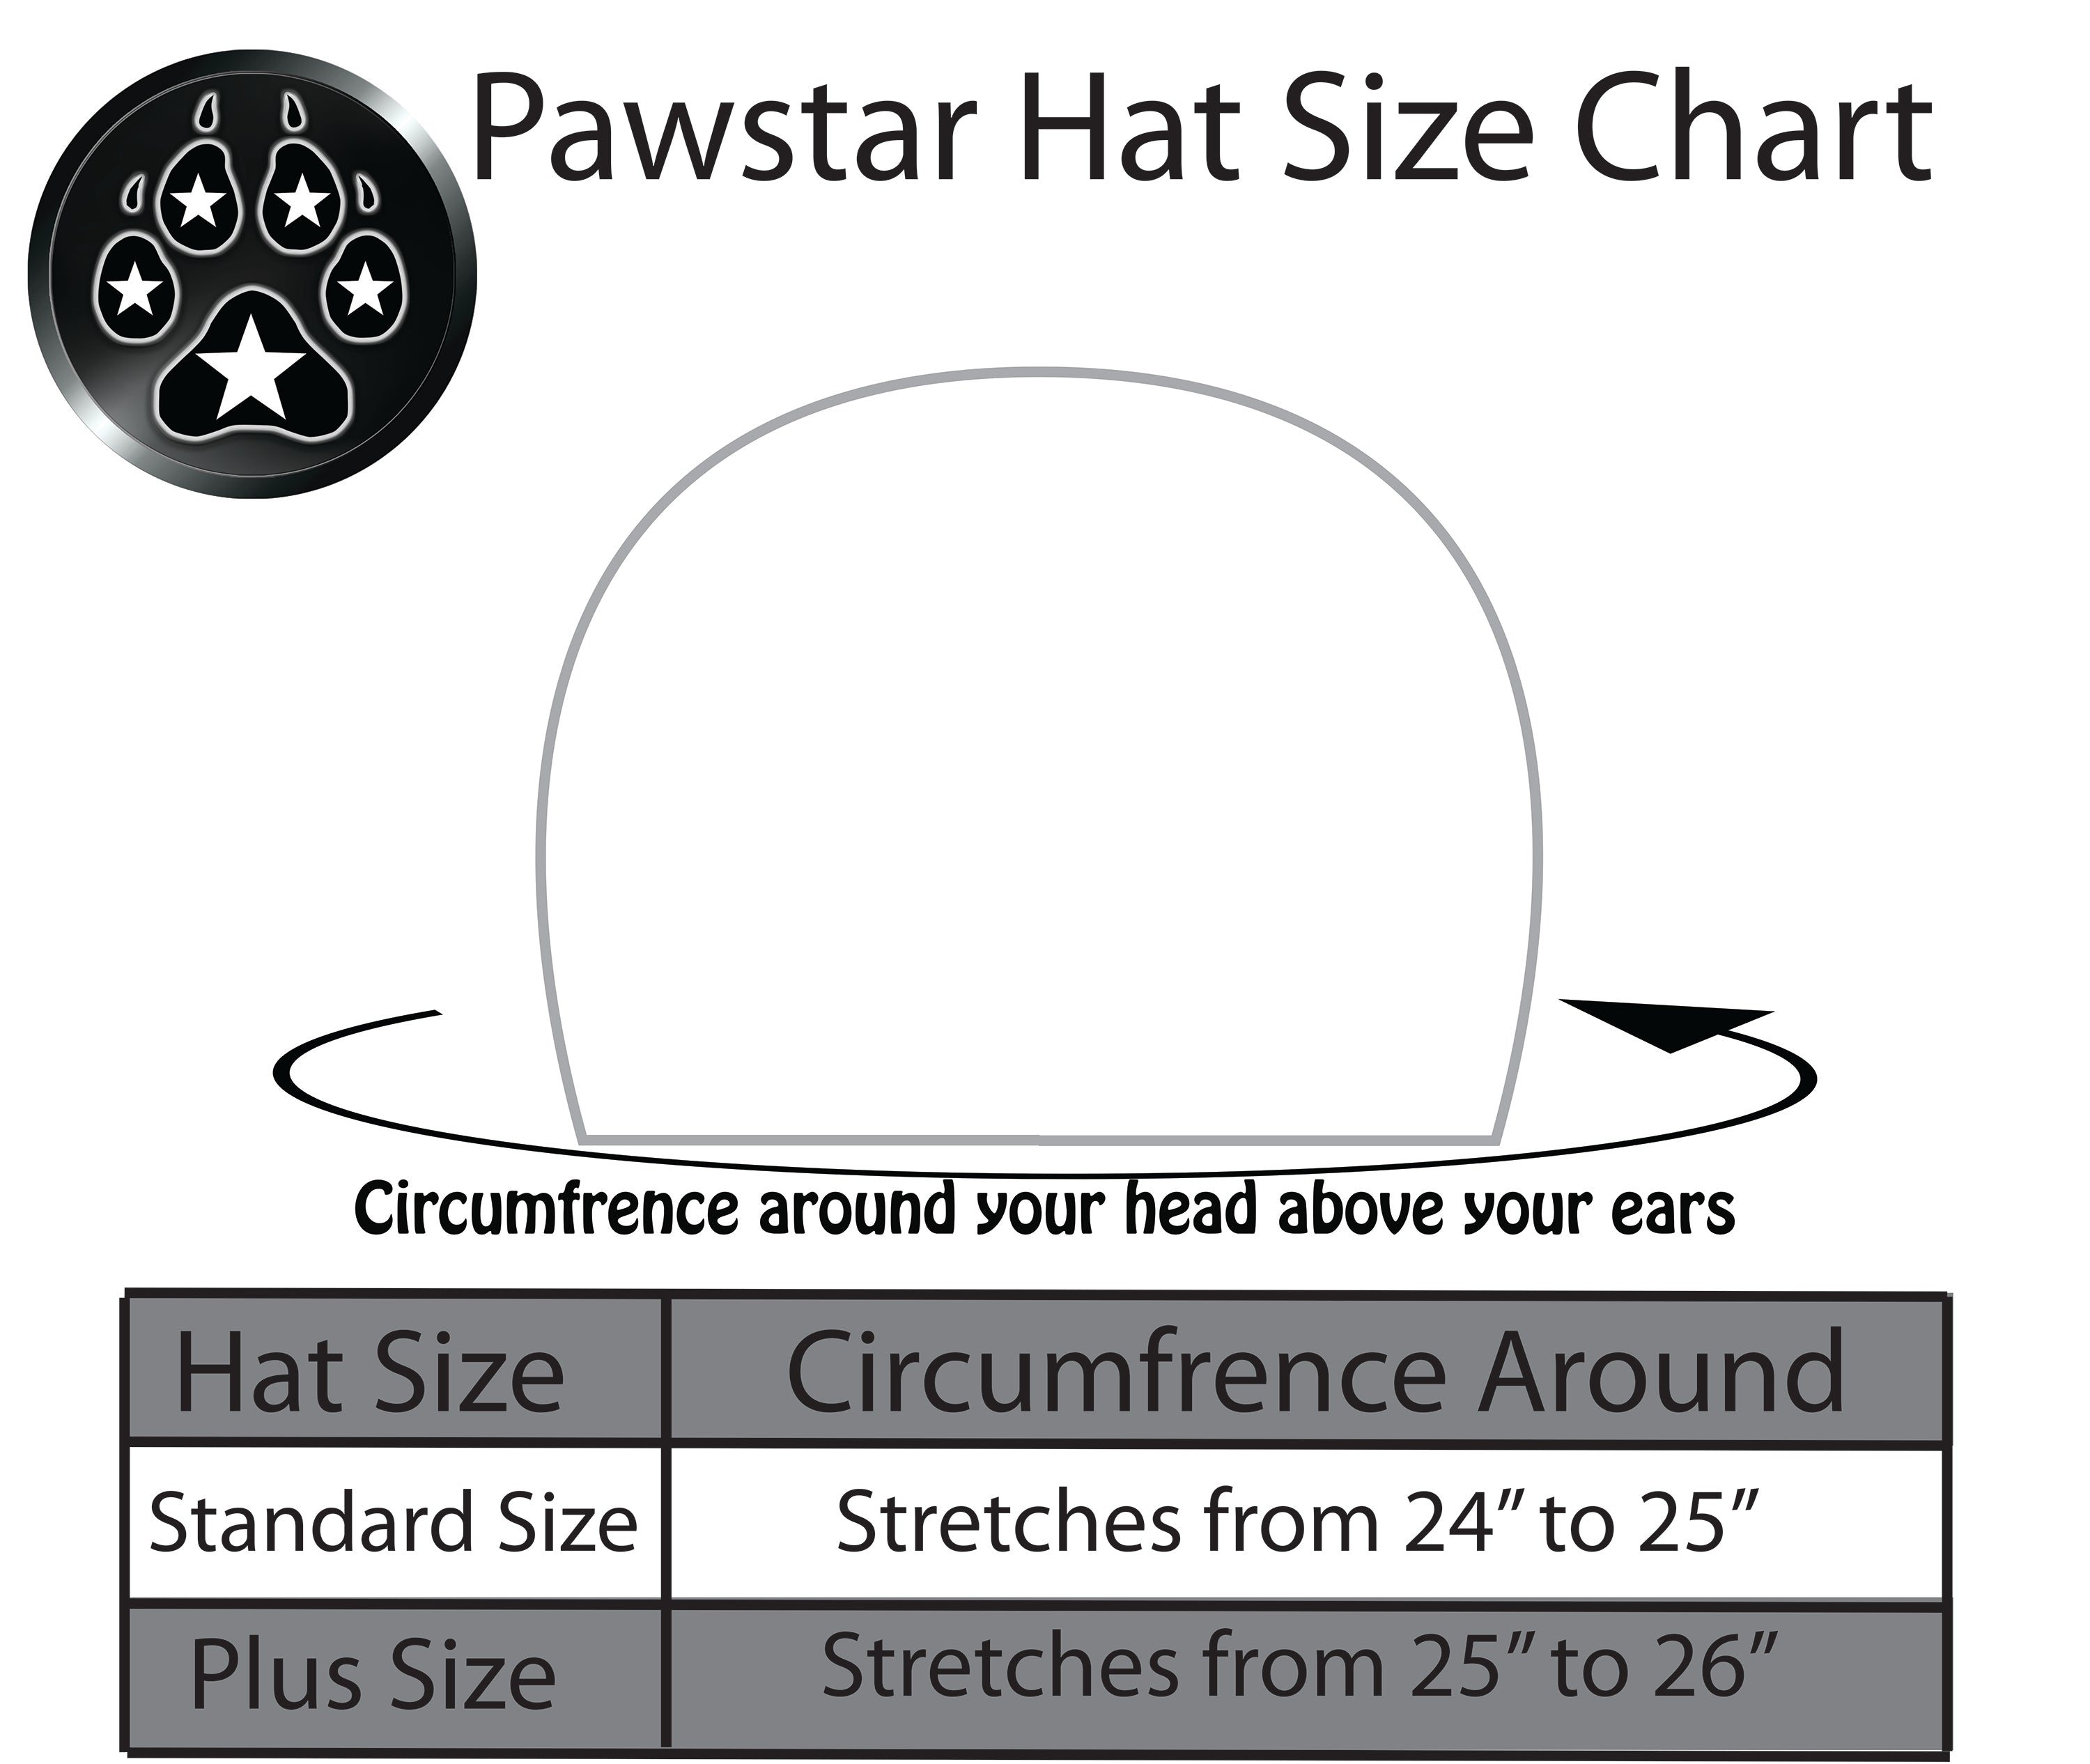 Bio Mega Bunny Hat - Pawstar Pawstar Fleece Hats bunny, cosplay, costume, furry, hat, new, ship-15, ship-30day